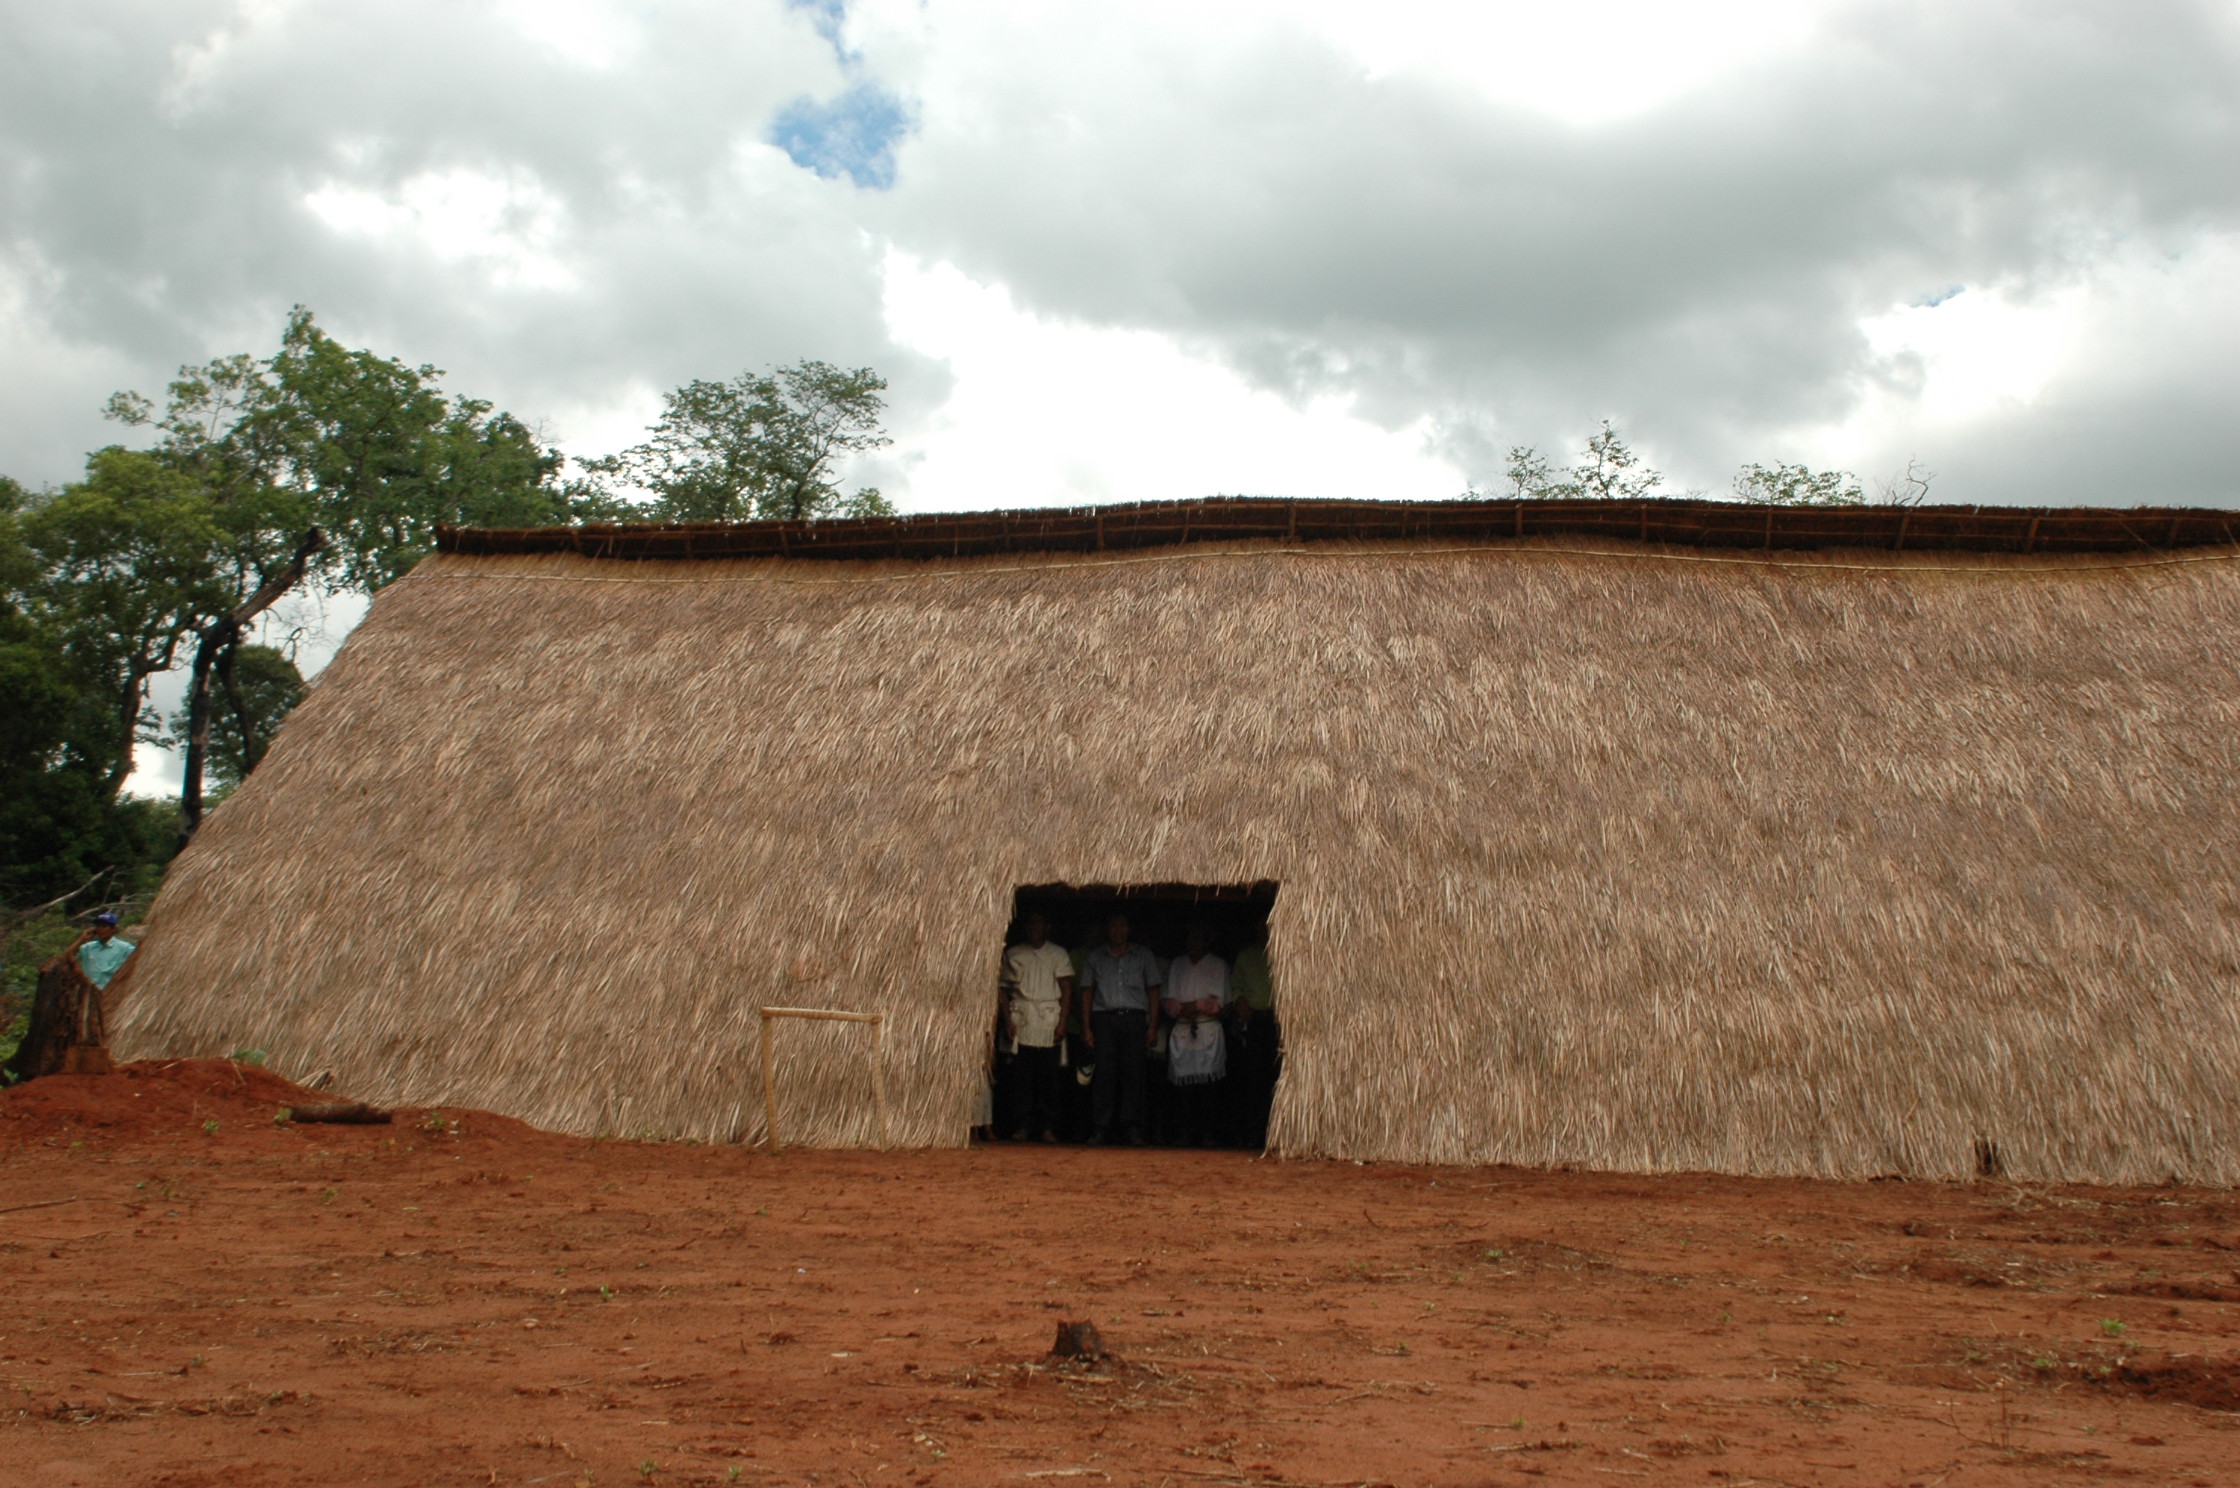 Óga jekutu. Casa ceremonial paĩ tavyterã, guarani. Fotografía: Rocío Ortega. Jaguati, Departamento de Amambay. 2011.